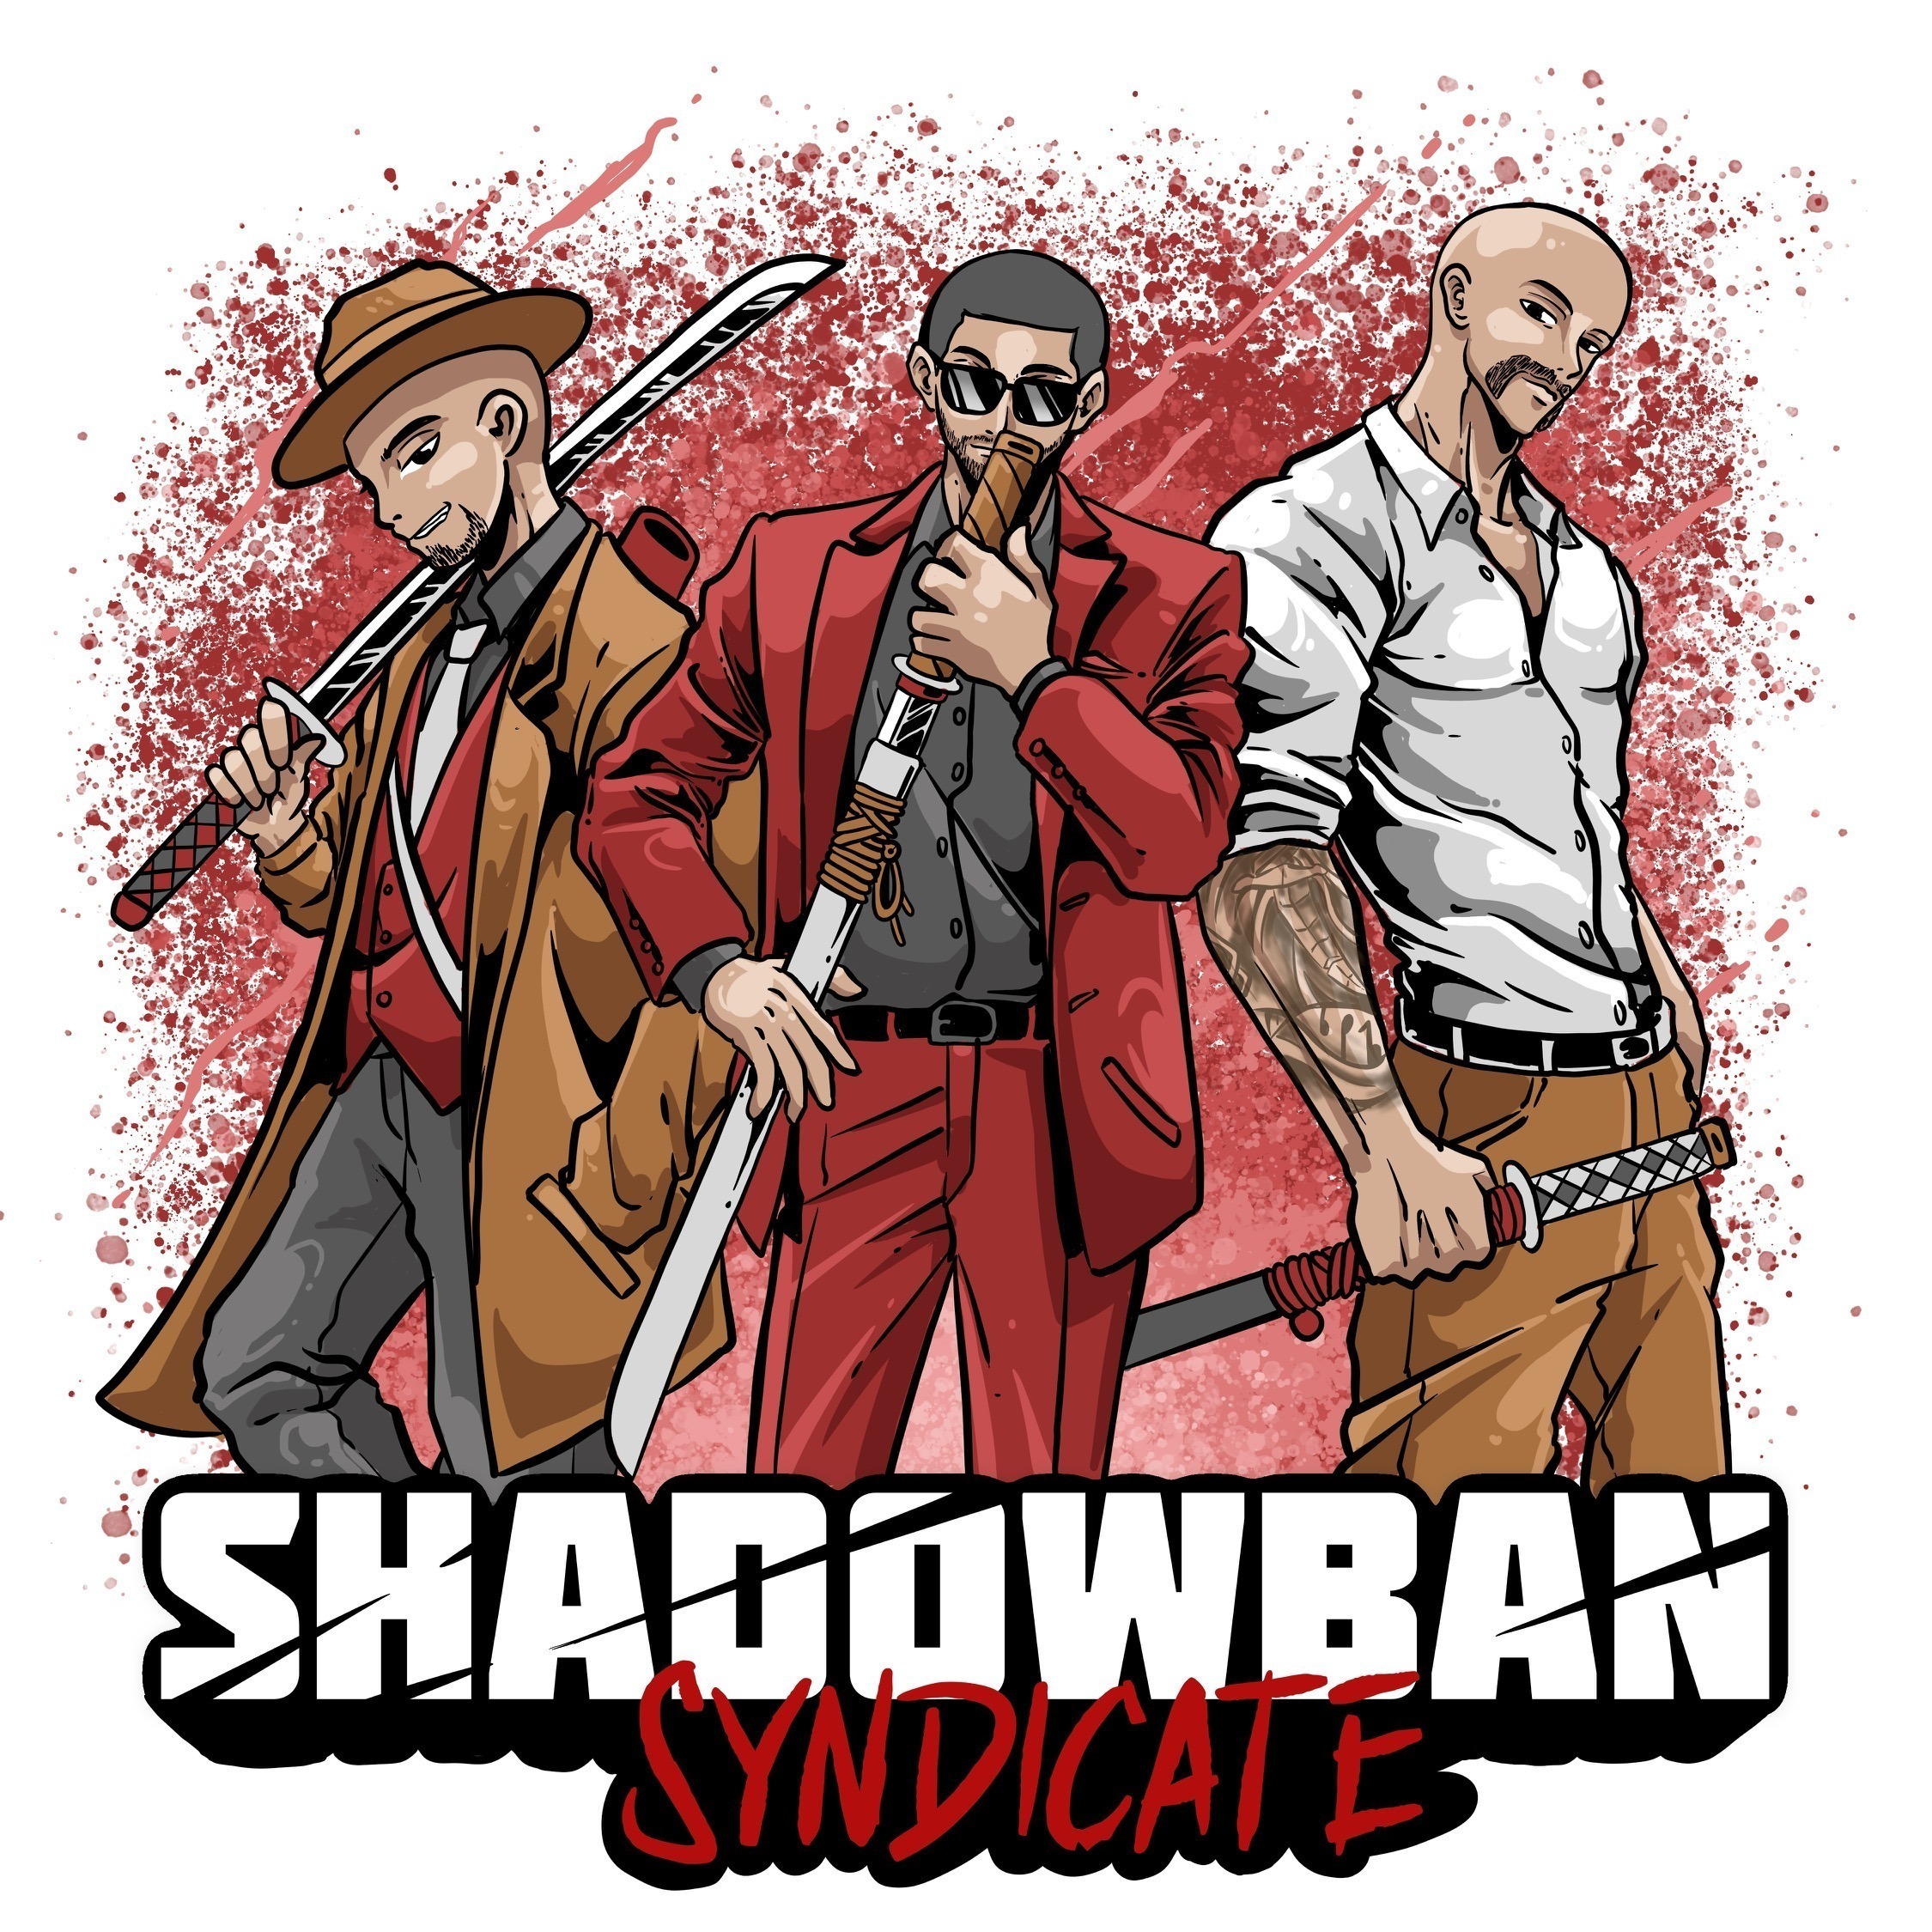 Shadowban Syndicate #1: 